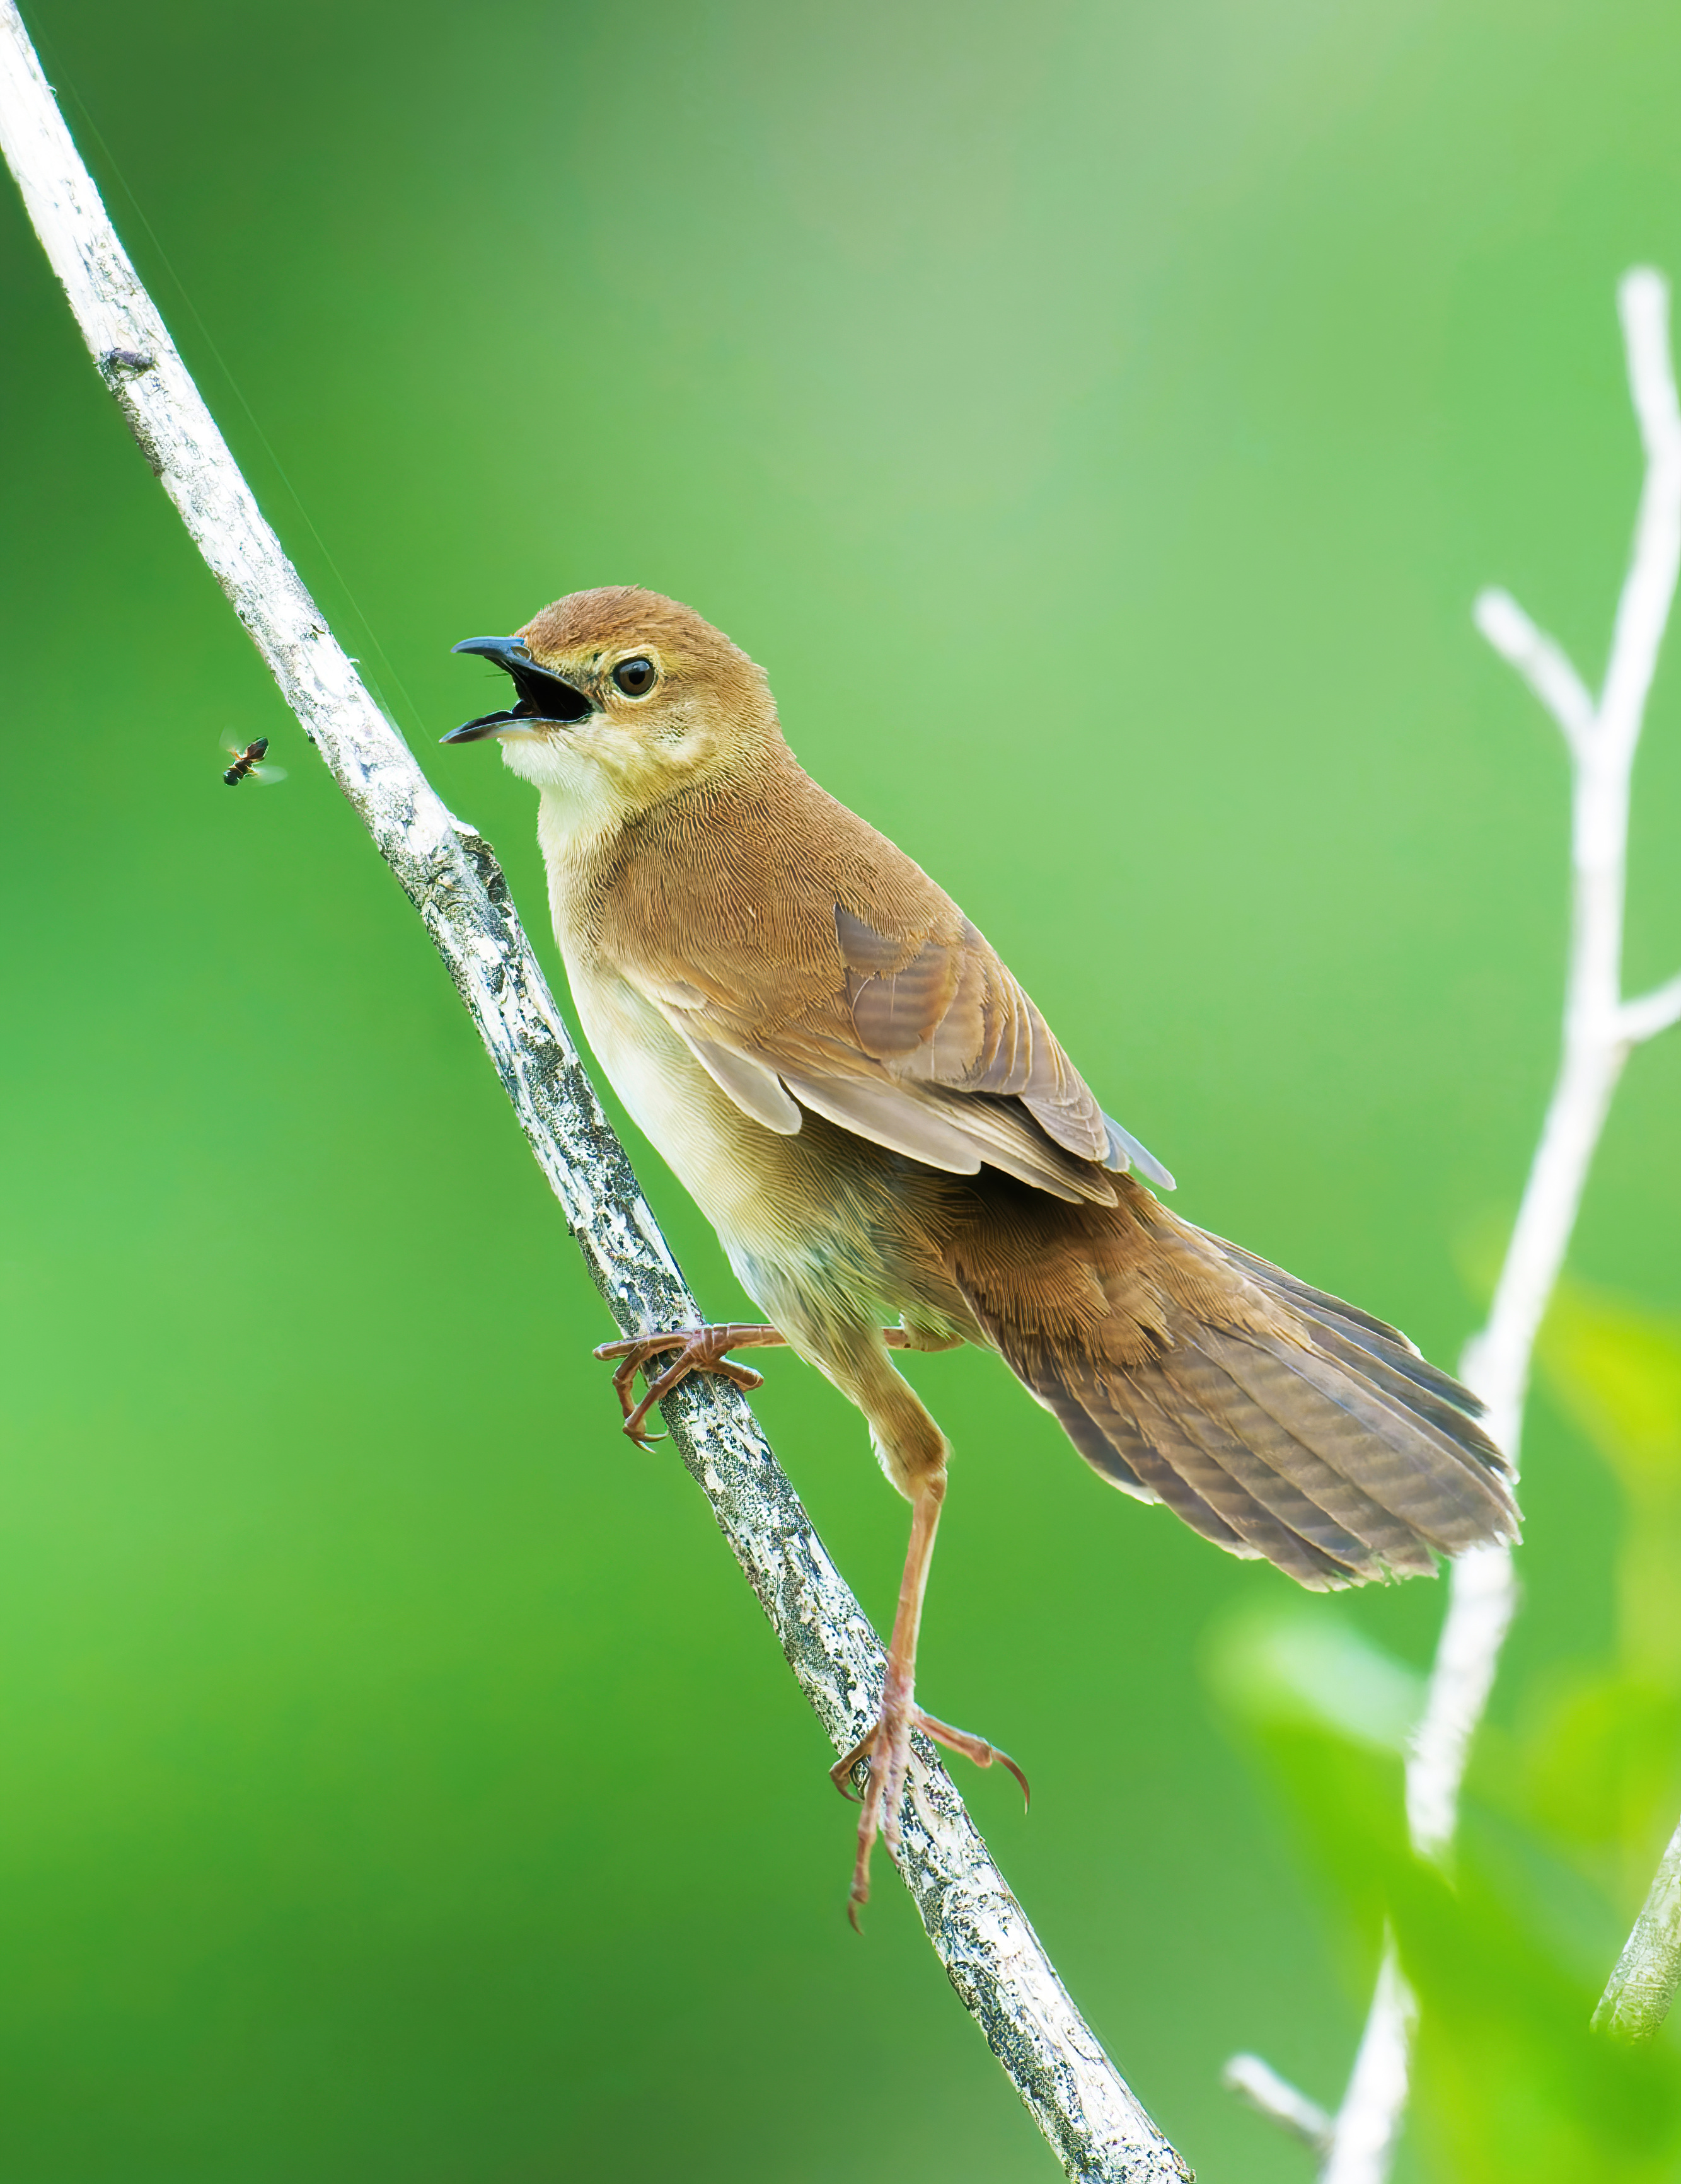 Protecting rare bird species urgency